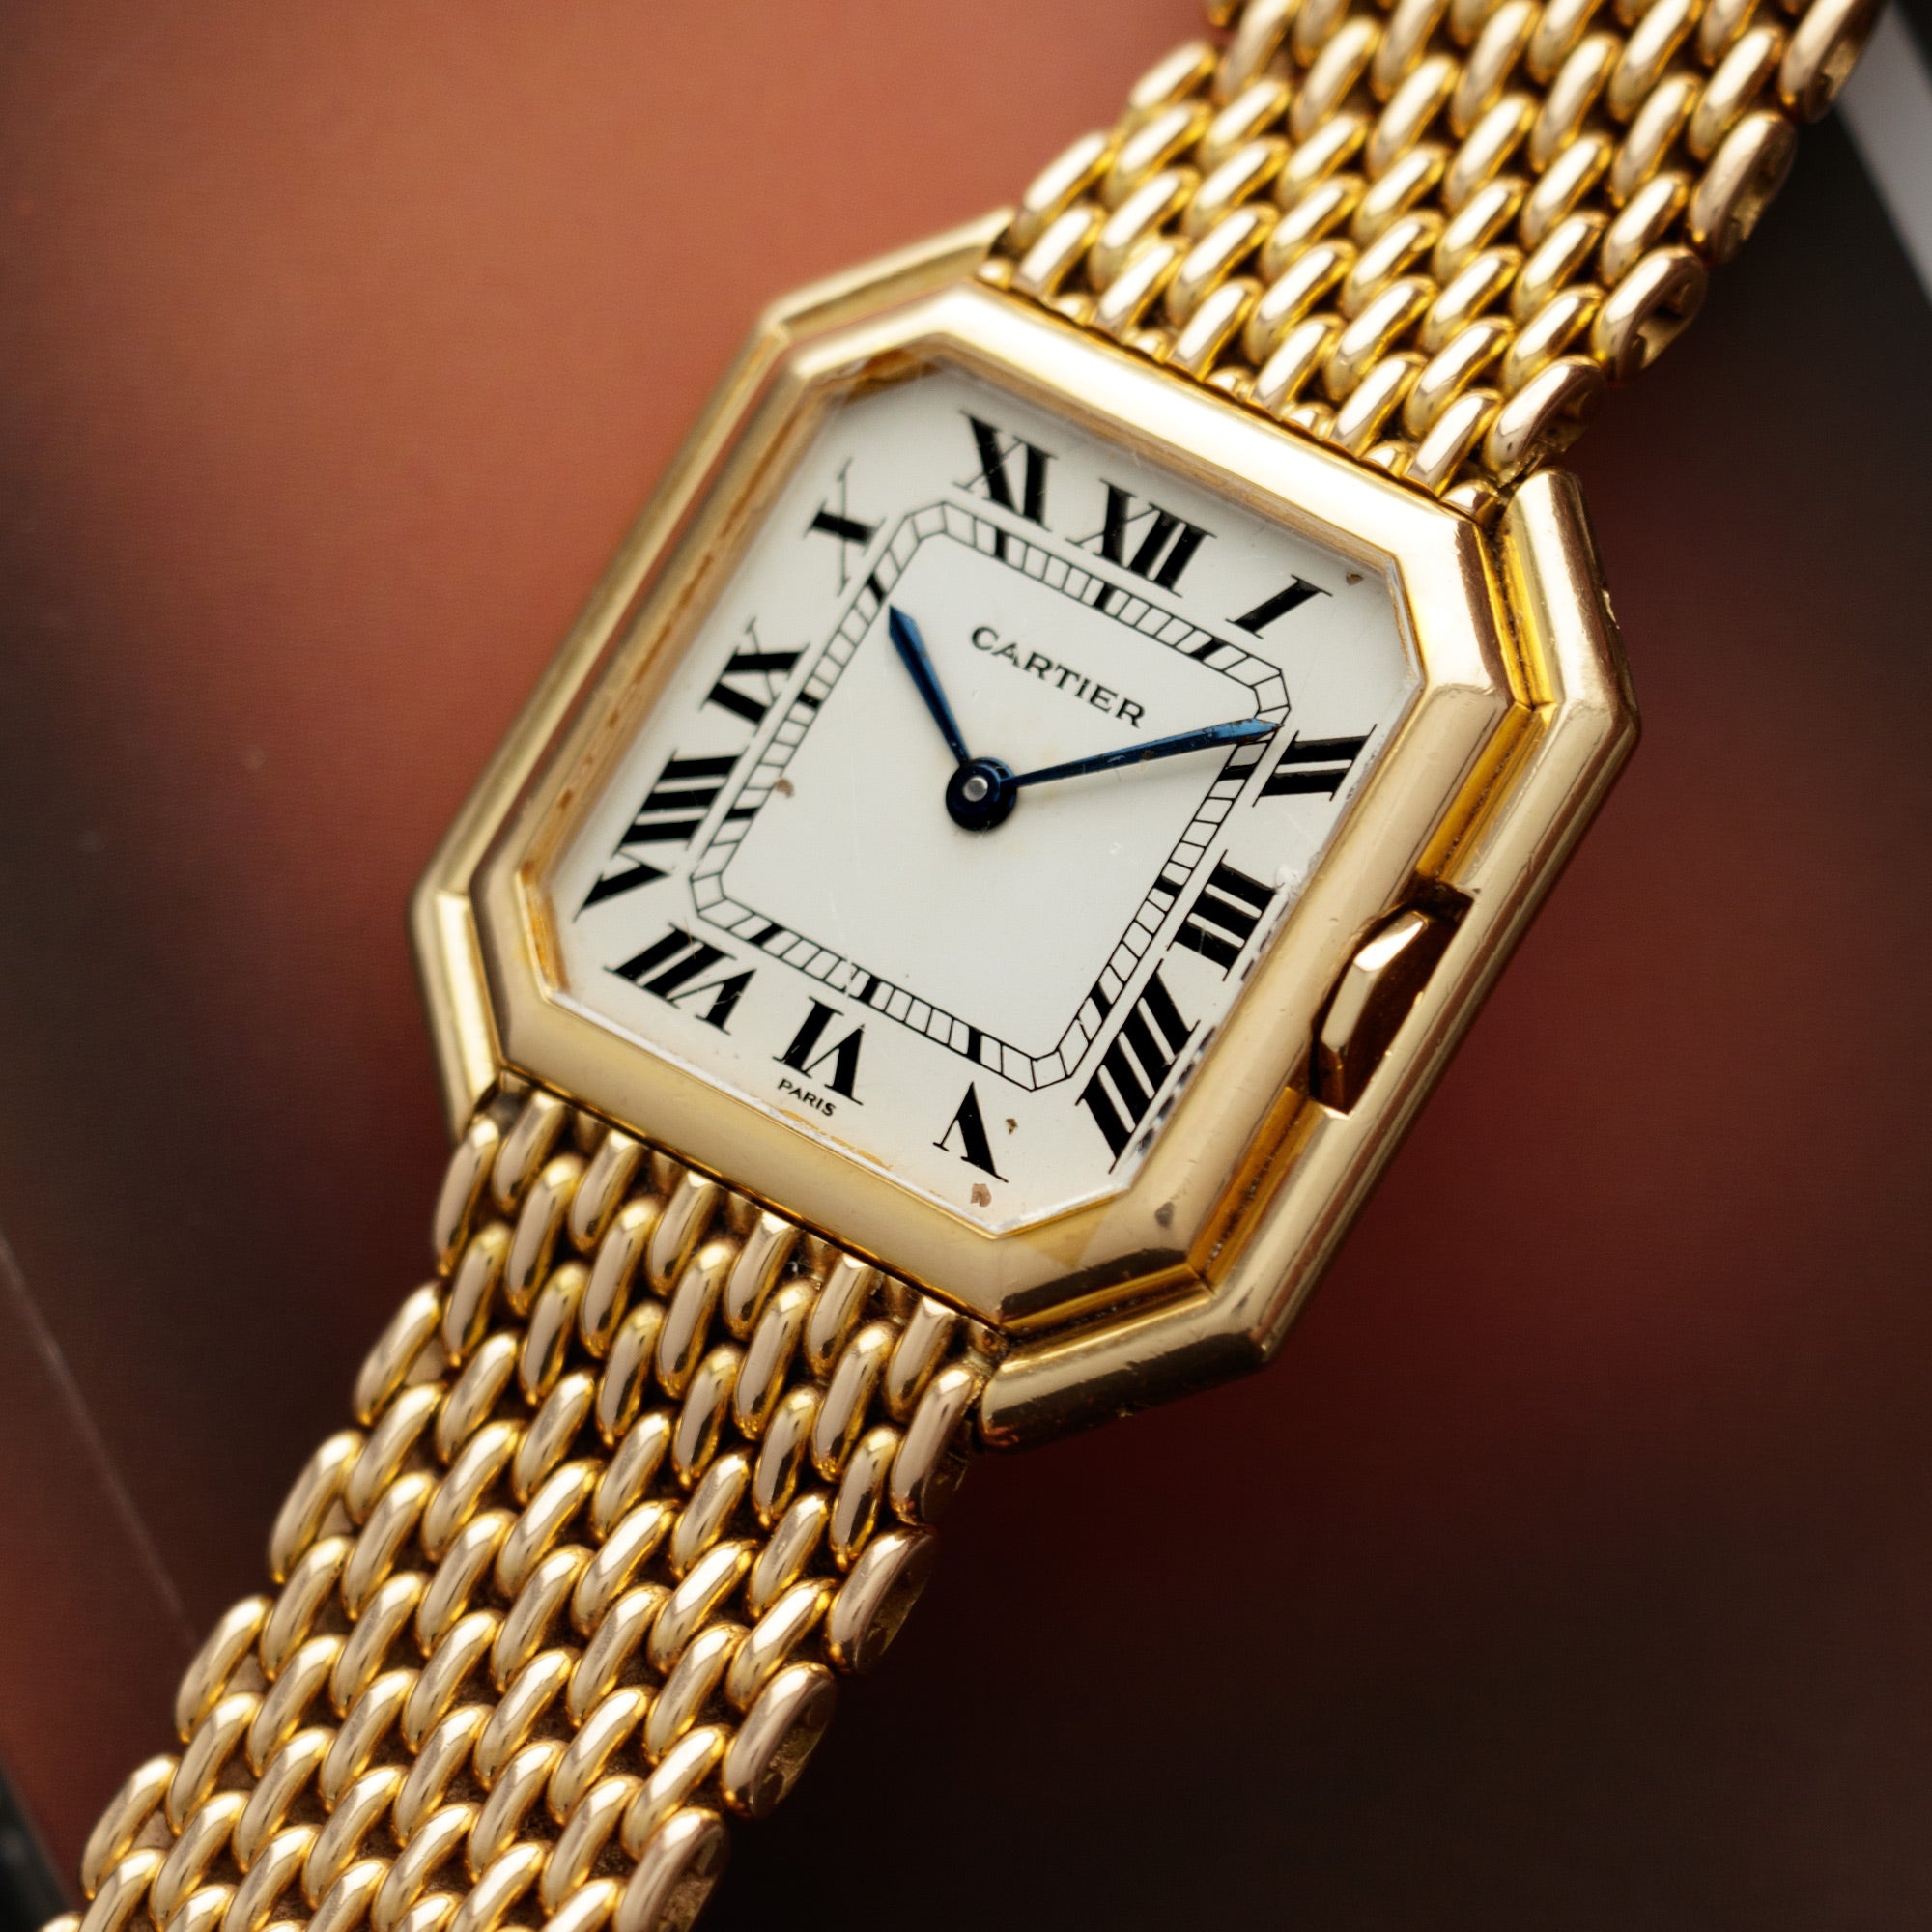 Cartier - Cartier Yellow Gold Tank Ceinture Automatic Watch on Original Bracelet - The Keystone Watches